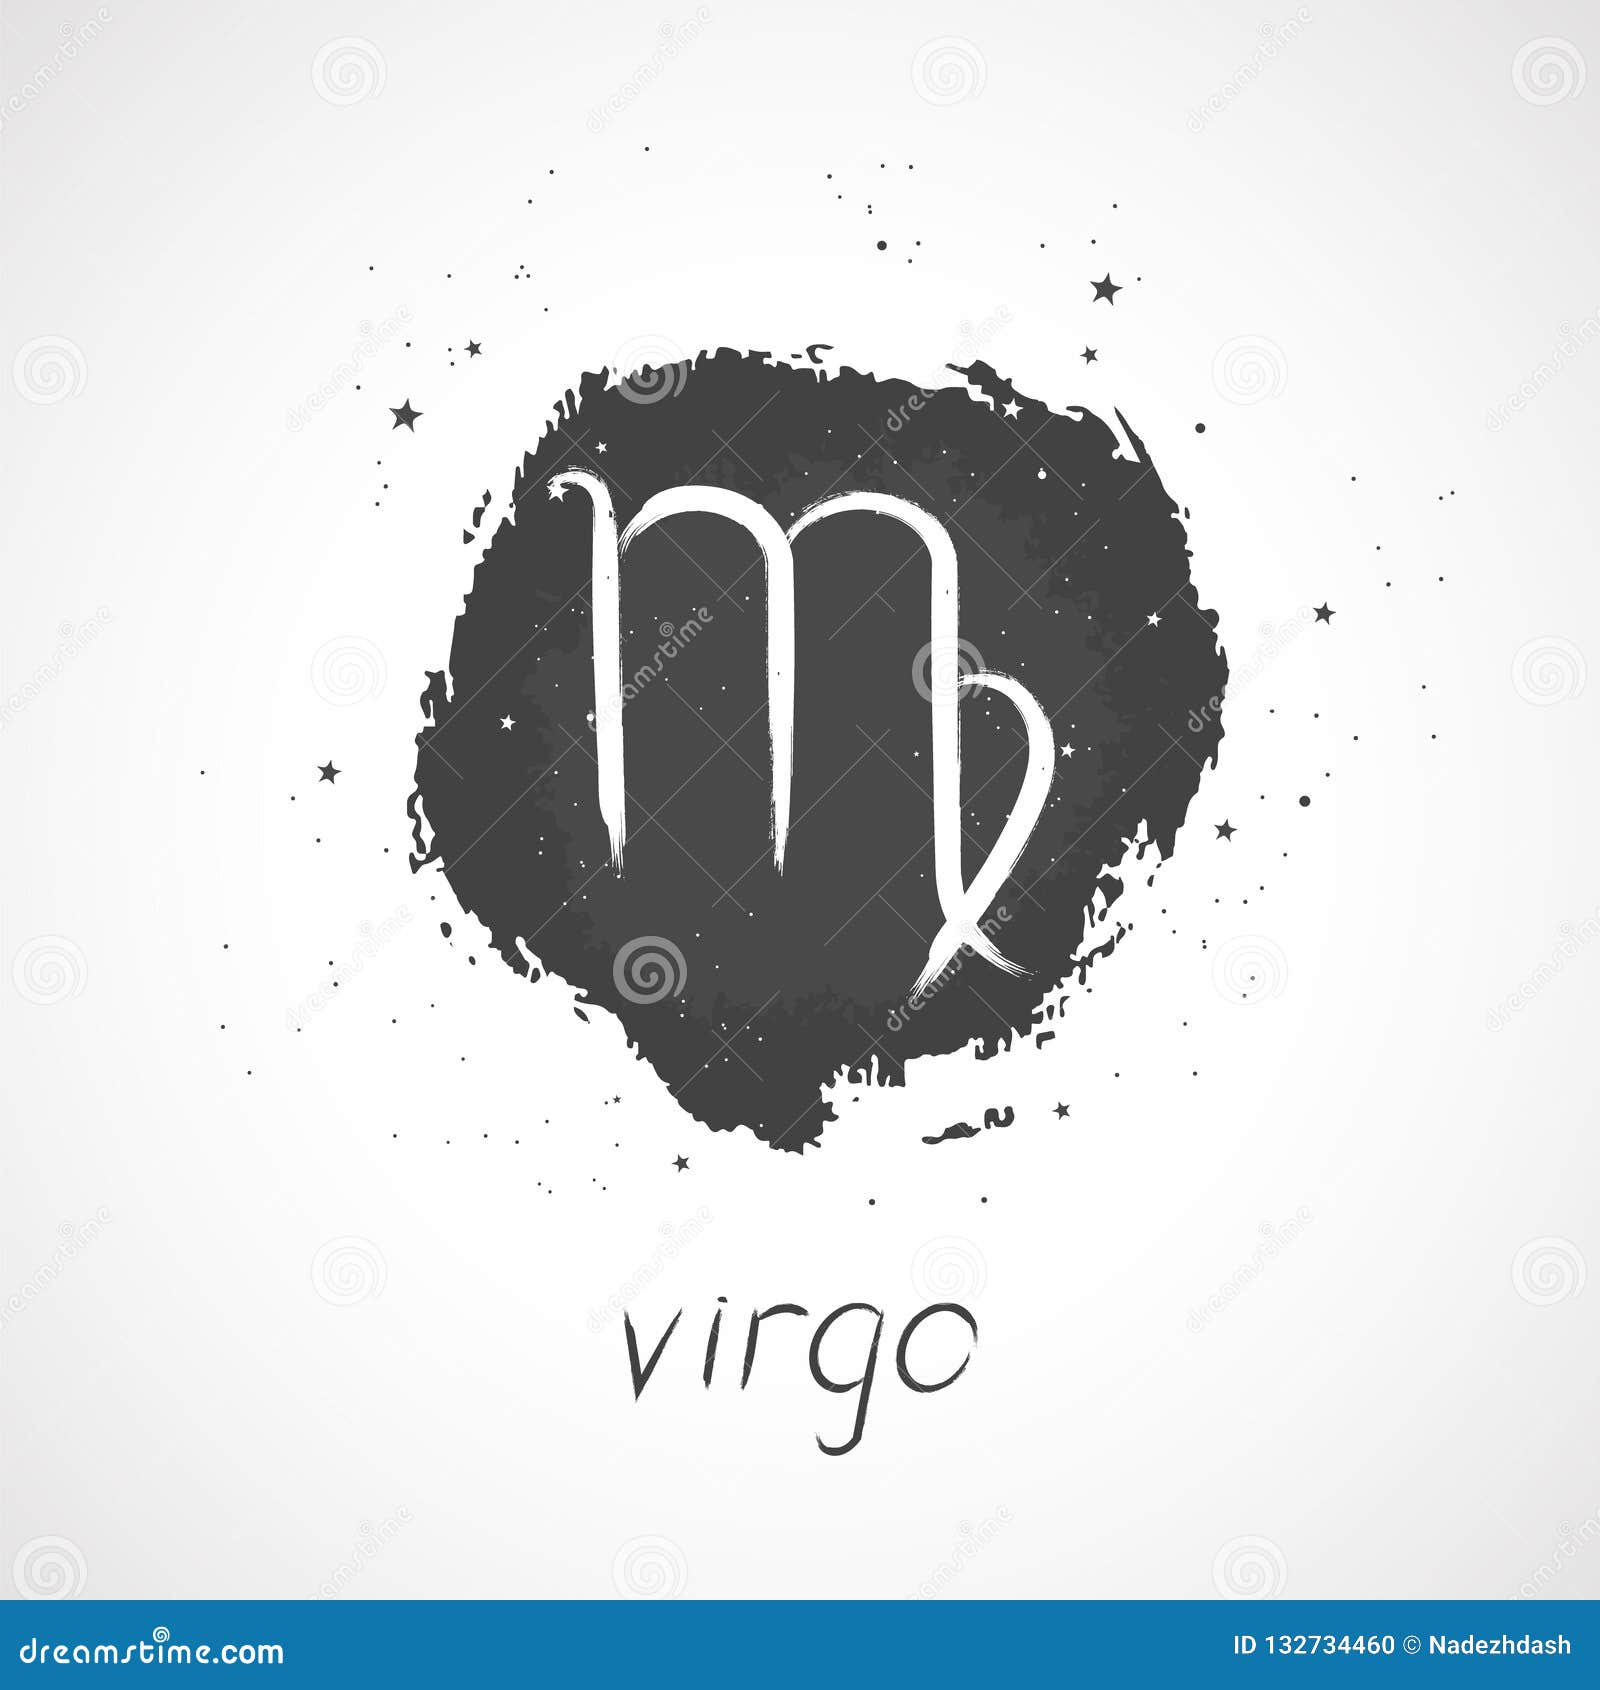 Vector Illustration with Hand Drawn Zodiac Sign VIRGO. Stock Vector ...